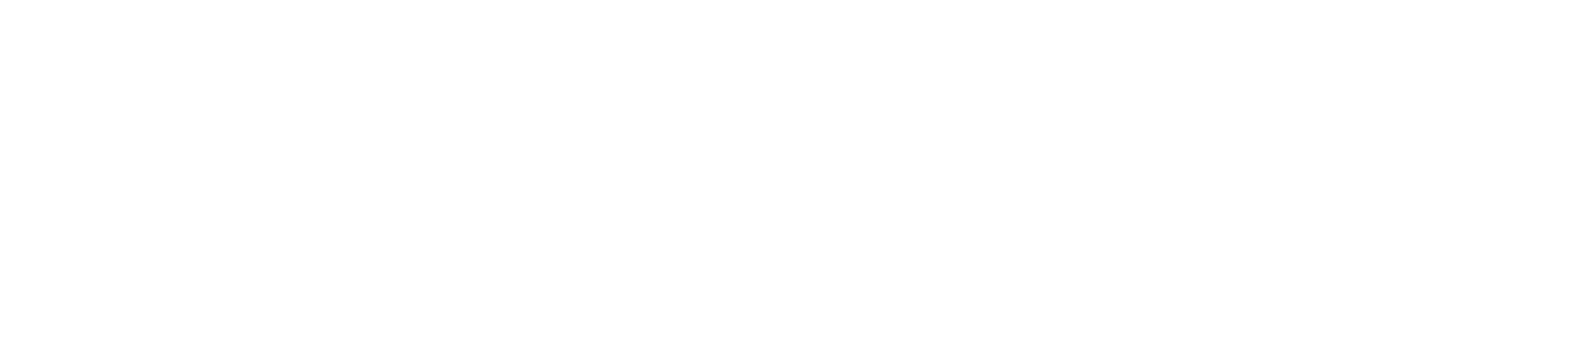 Westrock Logo groß für dunkle Hintergründe (transparentes PNG)